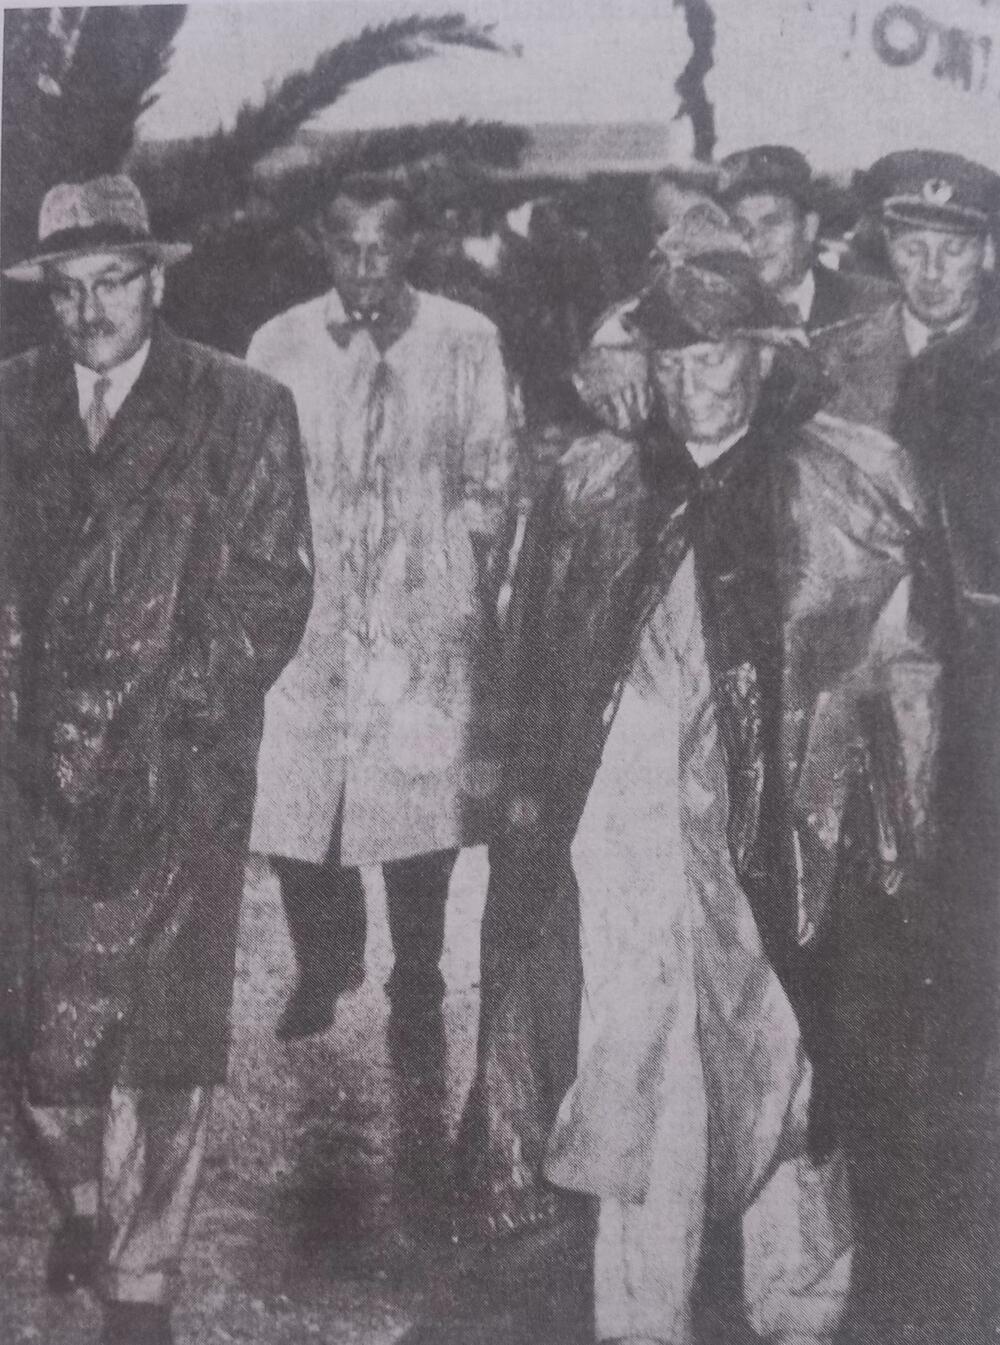 Kiša lije a oni pješice do barskog hotela “Topolica”. Slijeva: Blažo Jovanović, Tito, Vladimir Popović, Krsto Popivoda i general Milan Žeželj, septembra 1959. 